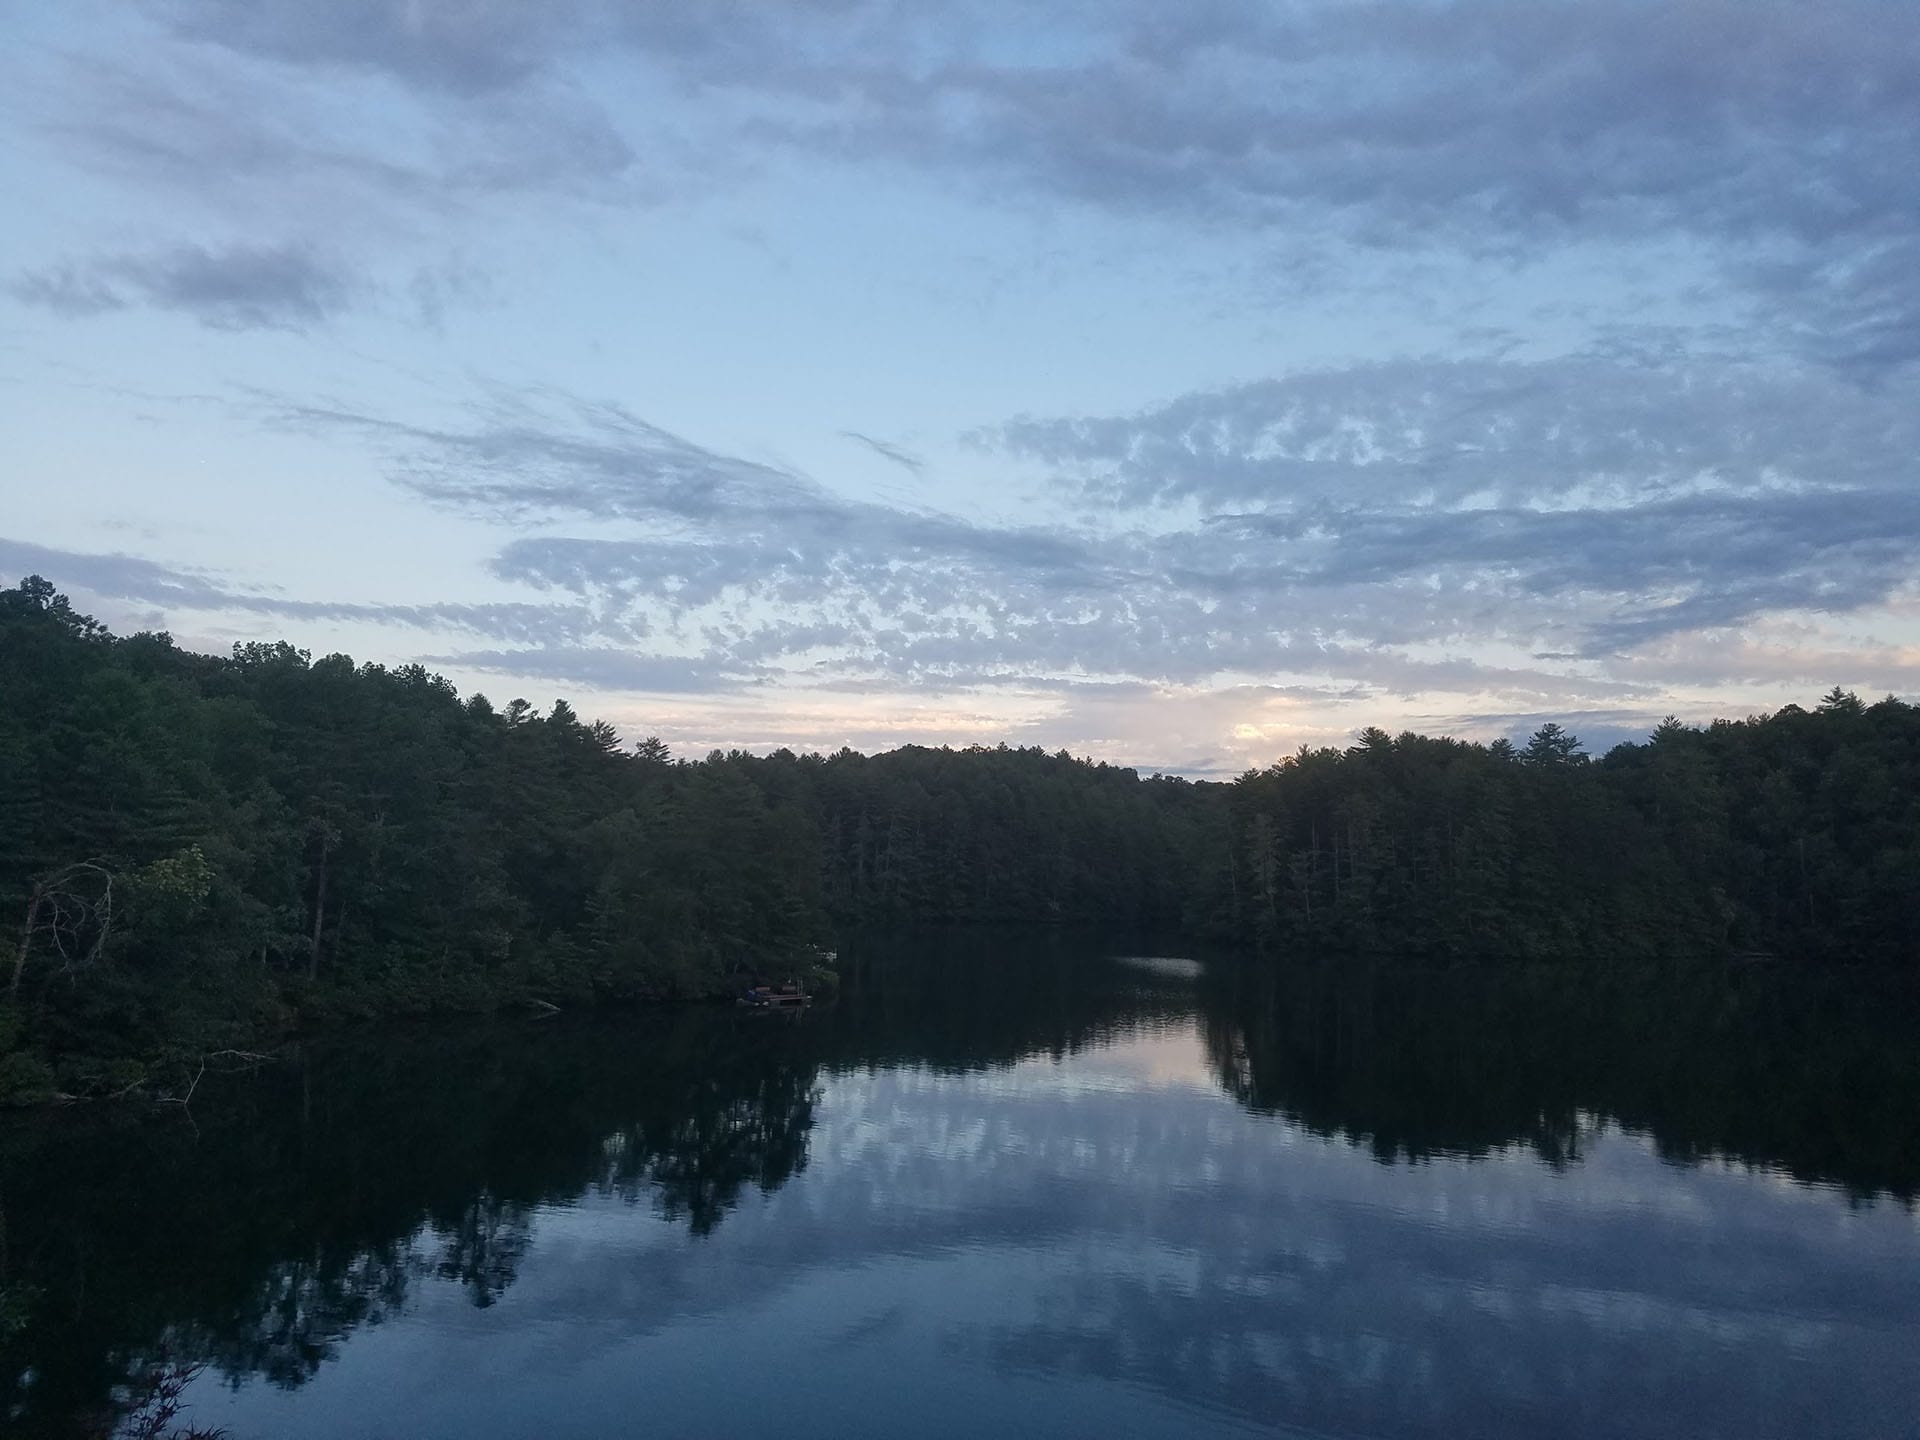 calm and peaceful lake, upstream collaborative bg image